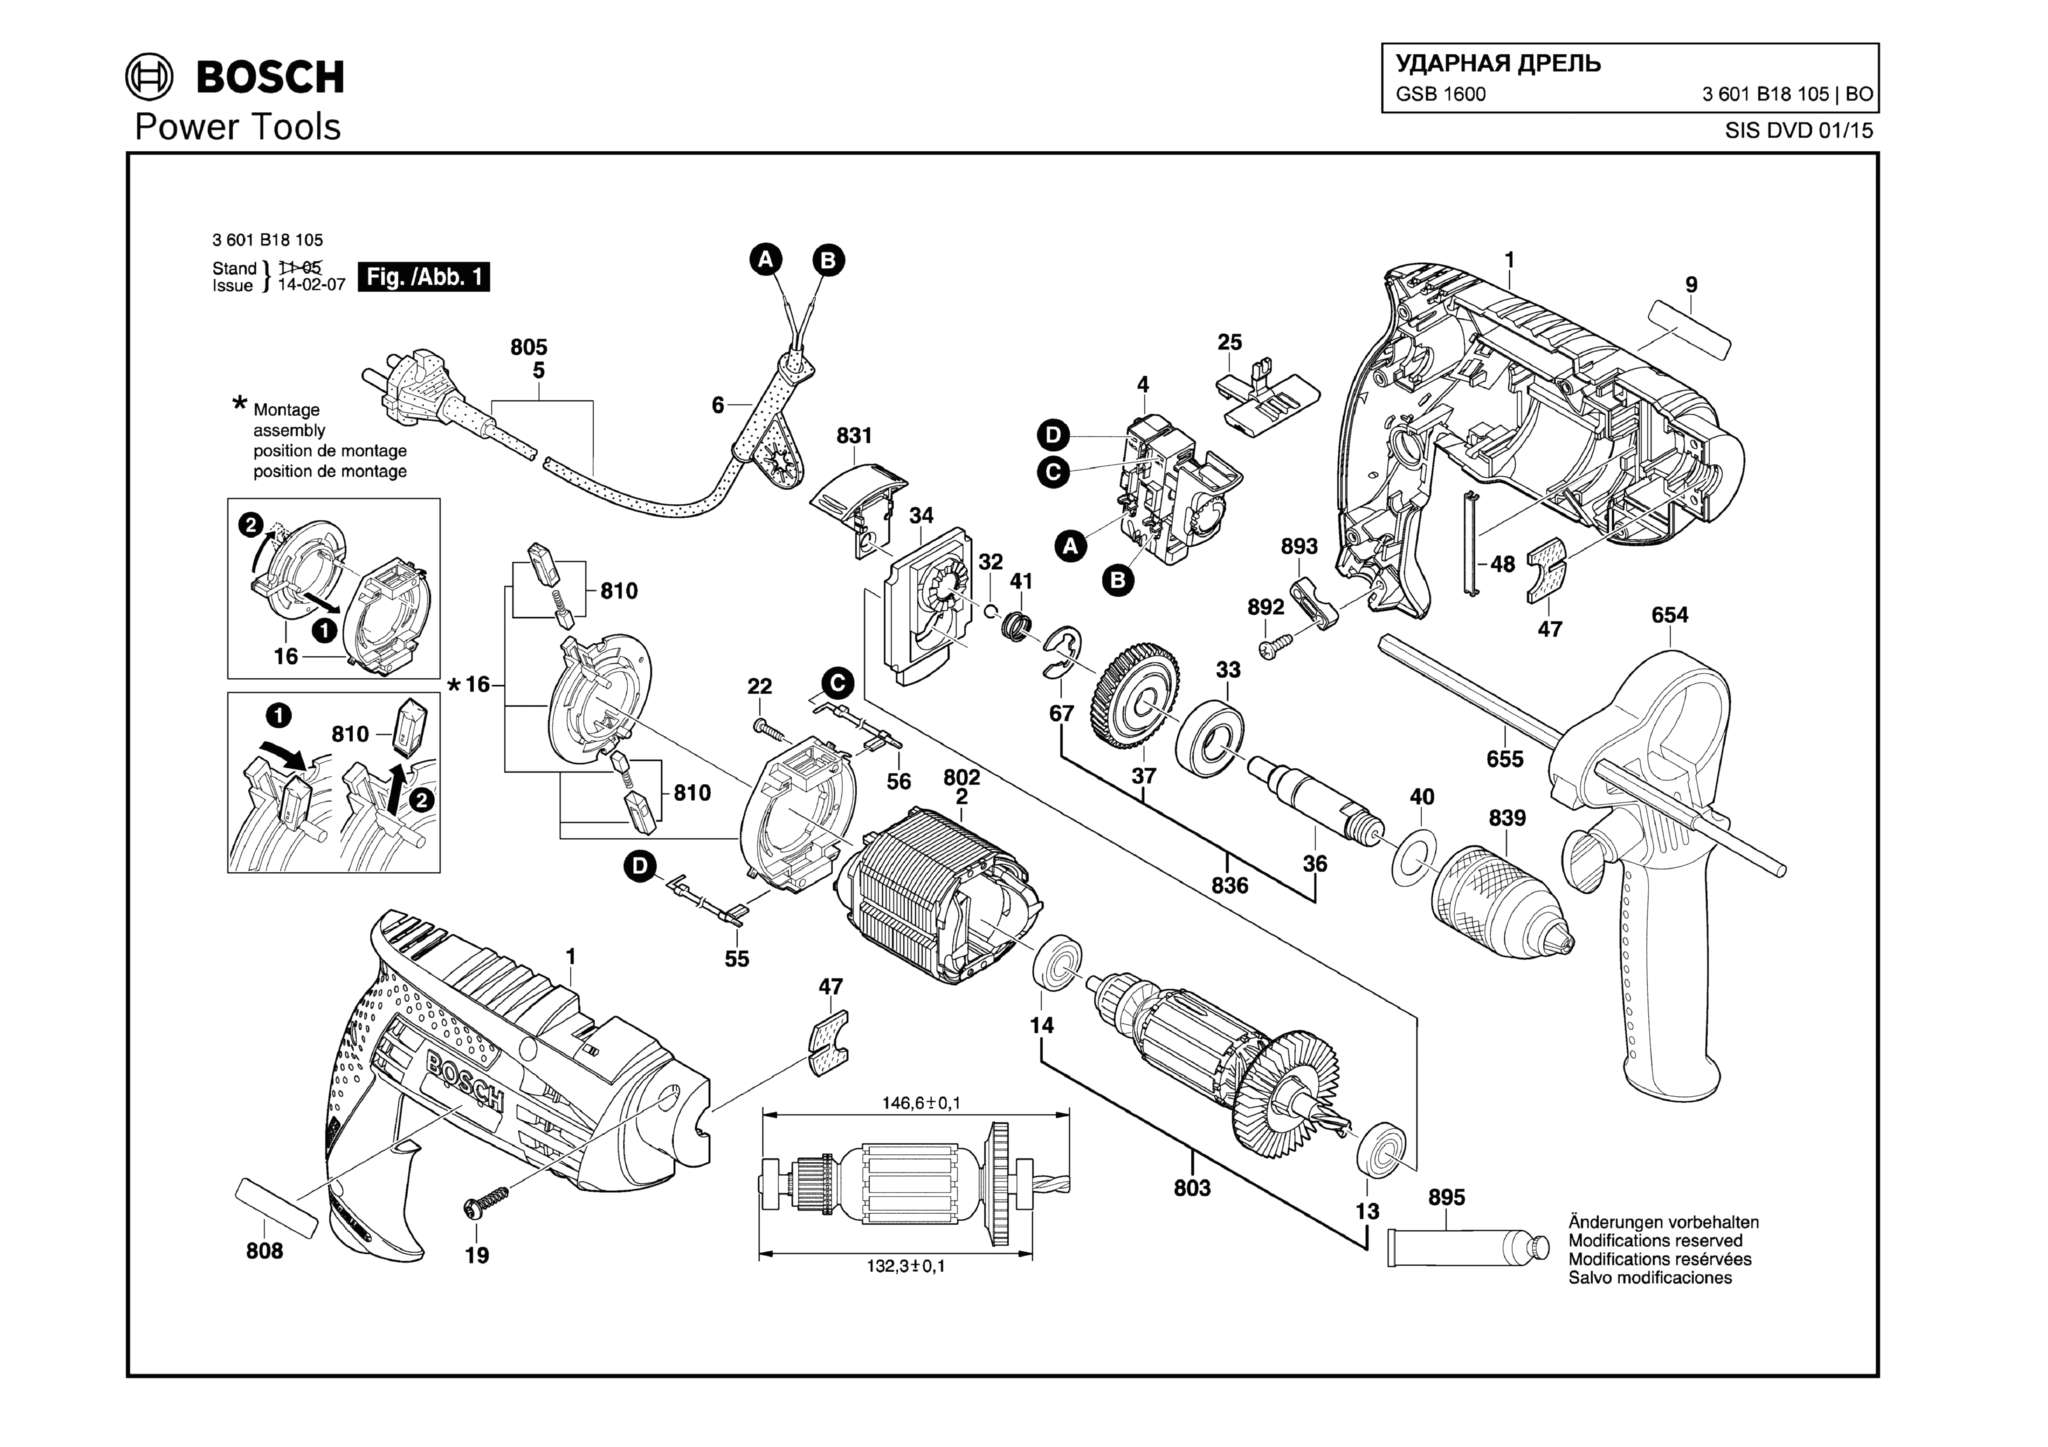 Запчасти, схема и деталировка Bosch GSB 1600 (ТИП 3601B18105)